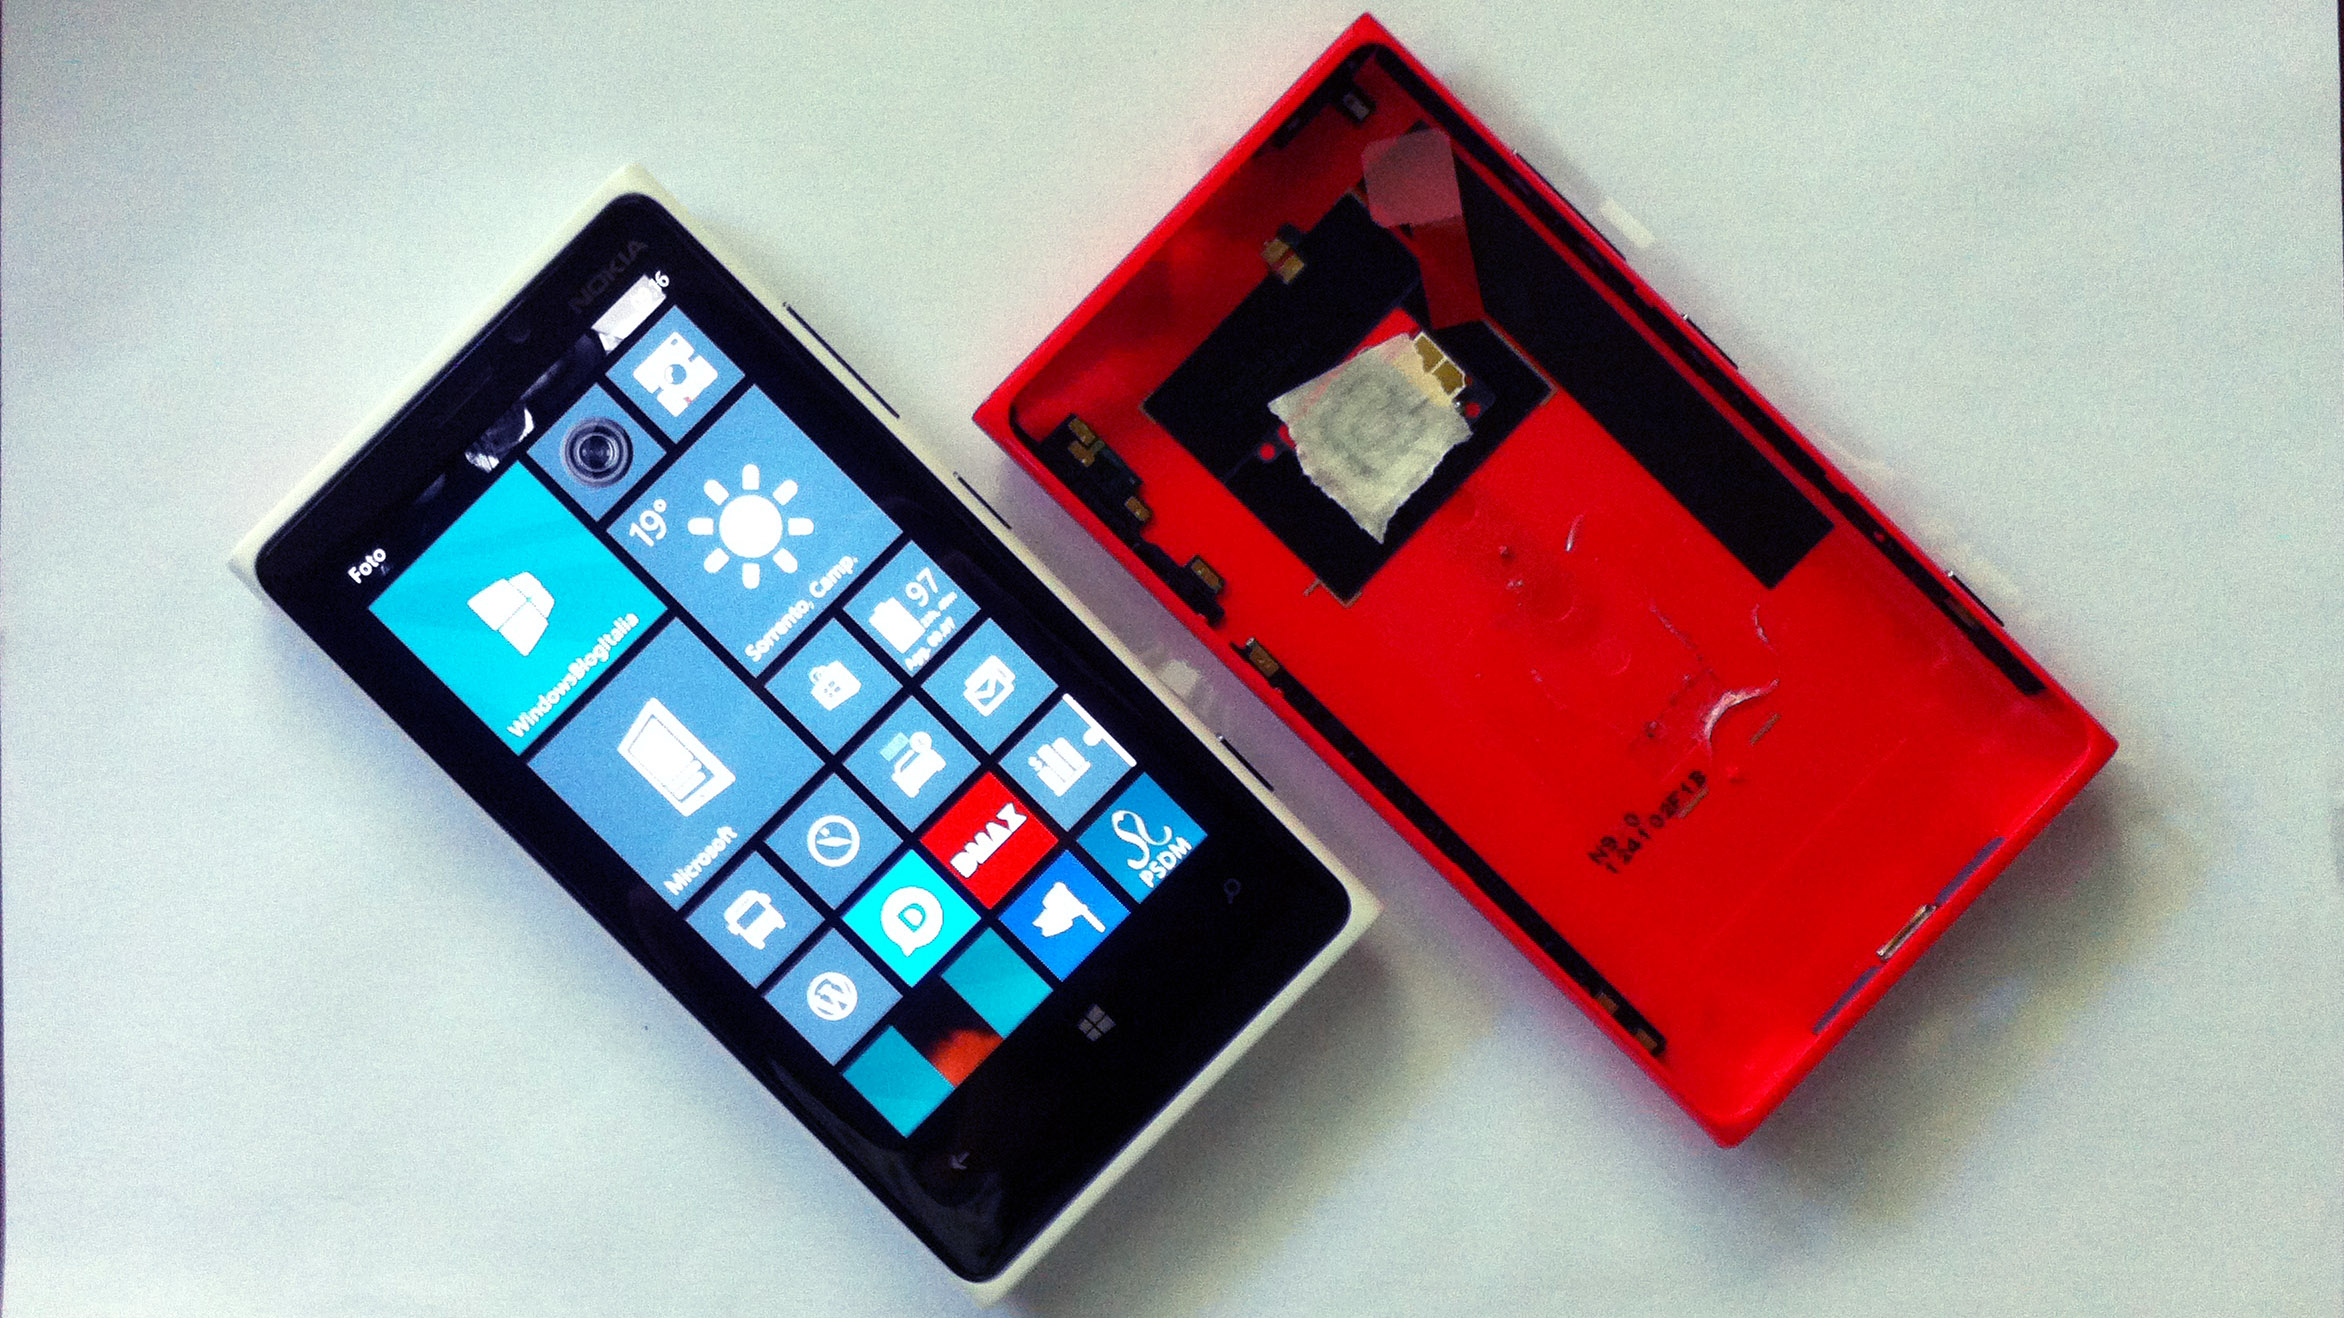 Nokia Lumia 920 Case Replace